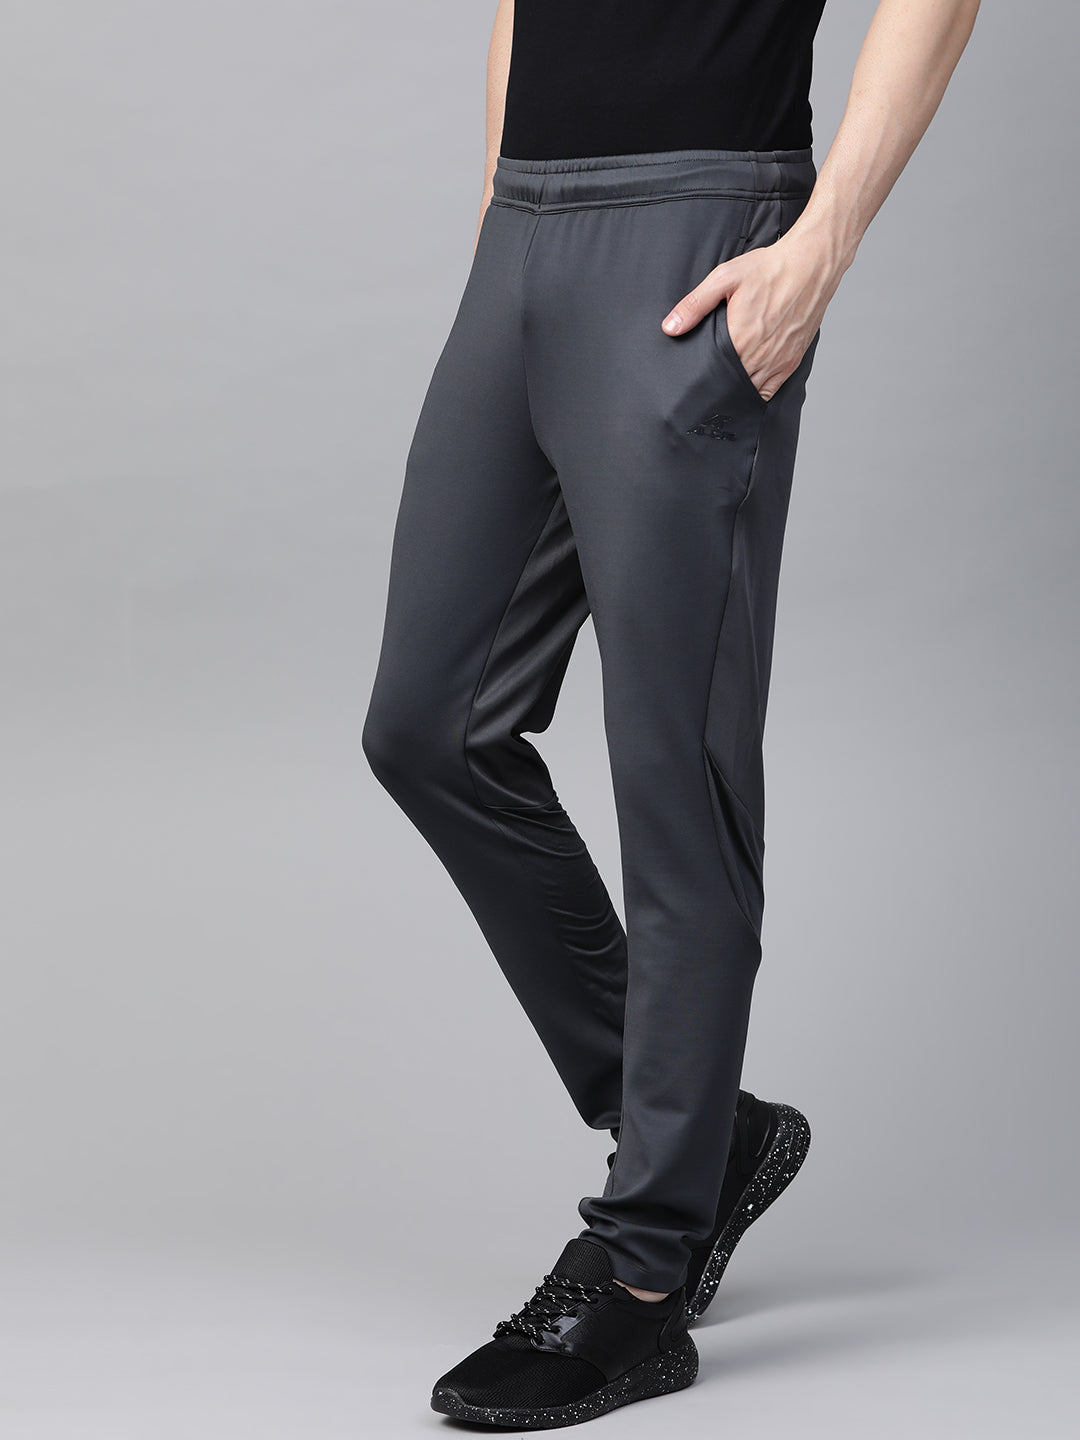 Alcis Men Charcoal Grey Solid Running Track Pants